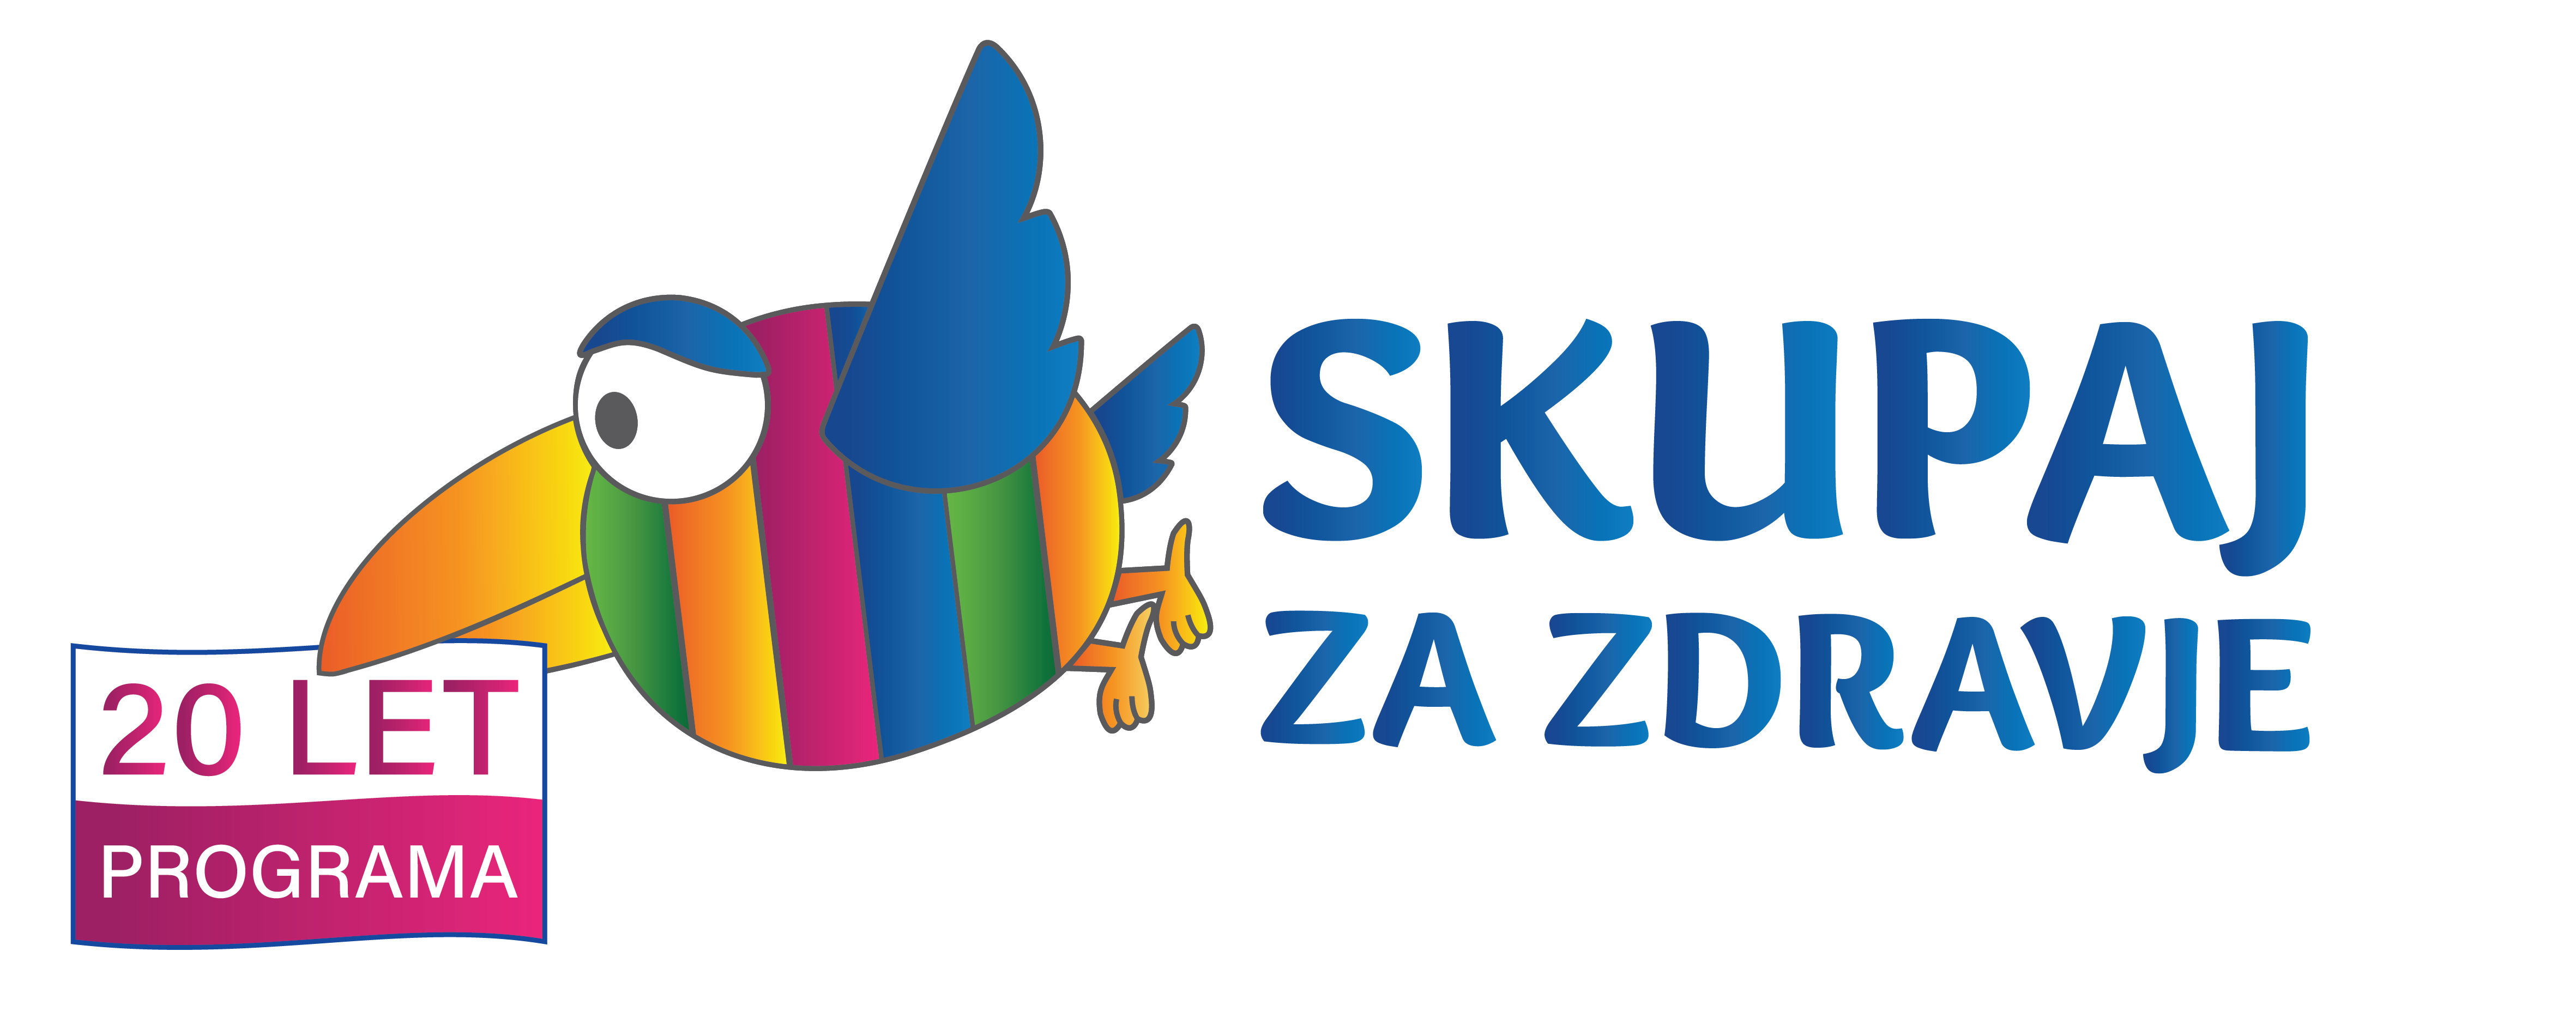 szz_logo2_color-02